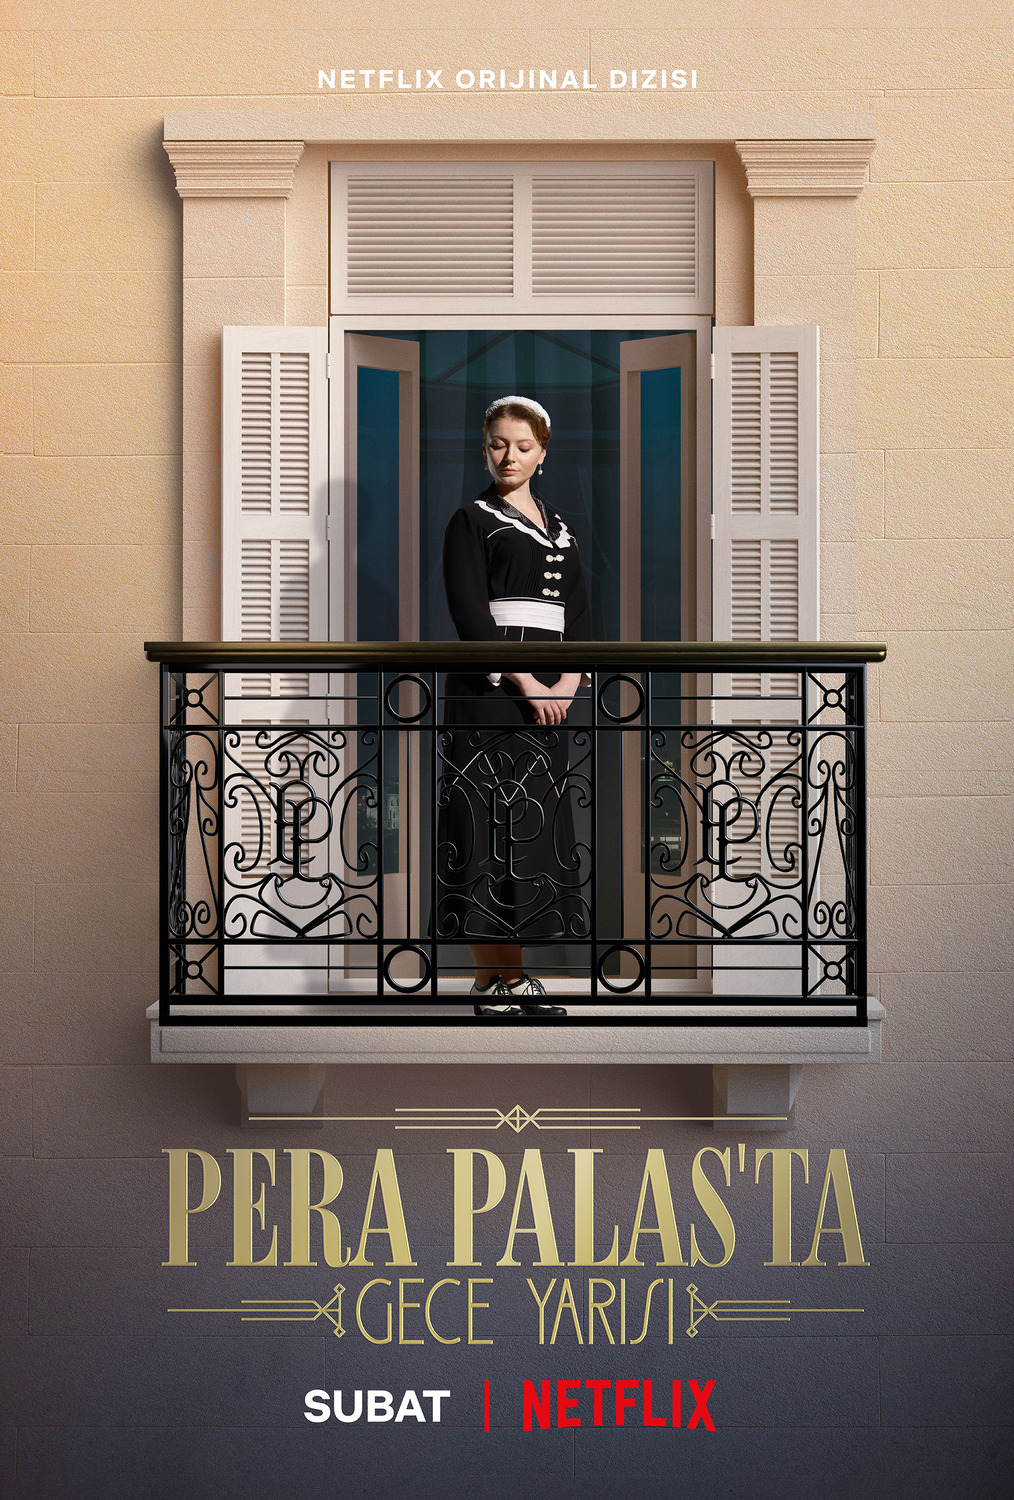 Extra Large TV Poster Image for Pera Palas'ta Gece Yarisi (#10 of 10)